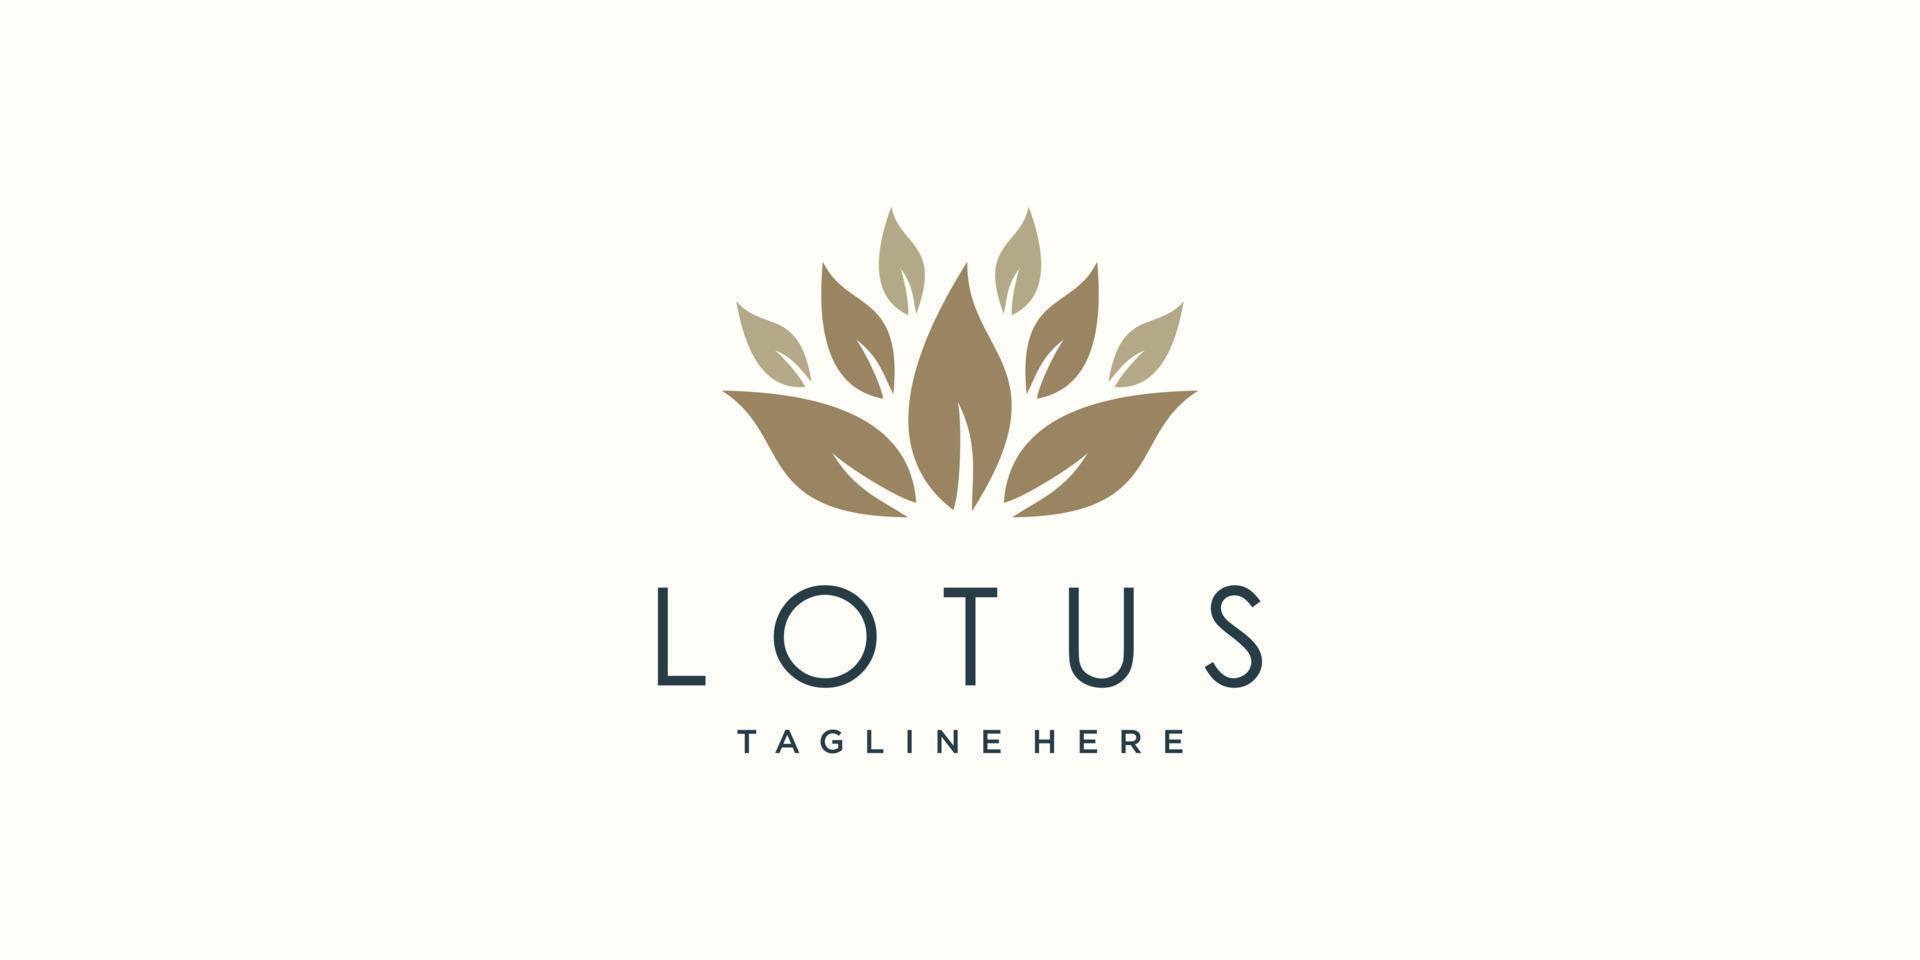 Lotus logo design with creative modern concept Premium Vector